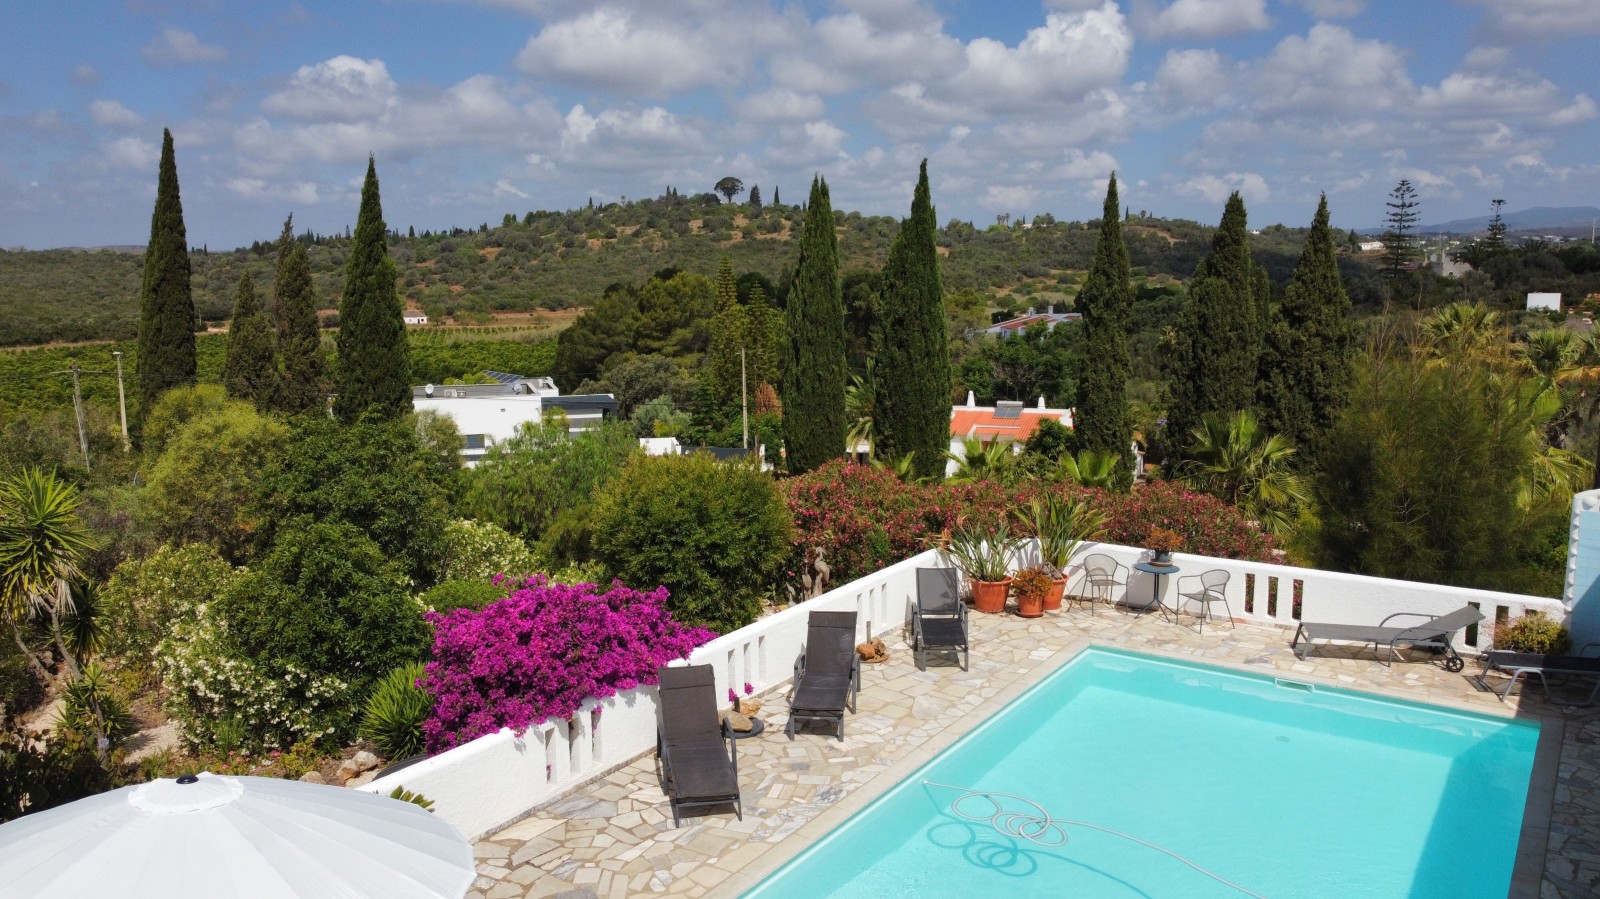 4 Bedroom Villa with swimming pool for sale in Monte Judeu, Algarve_228075